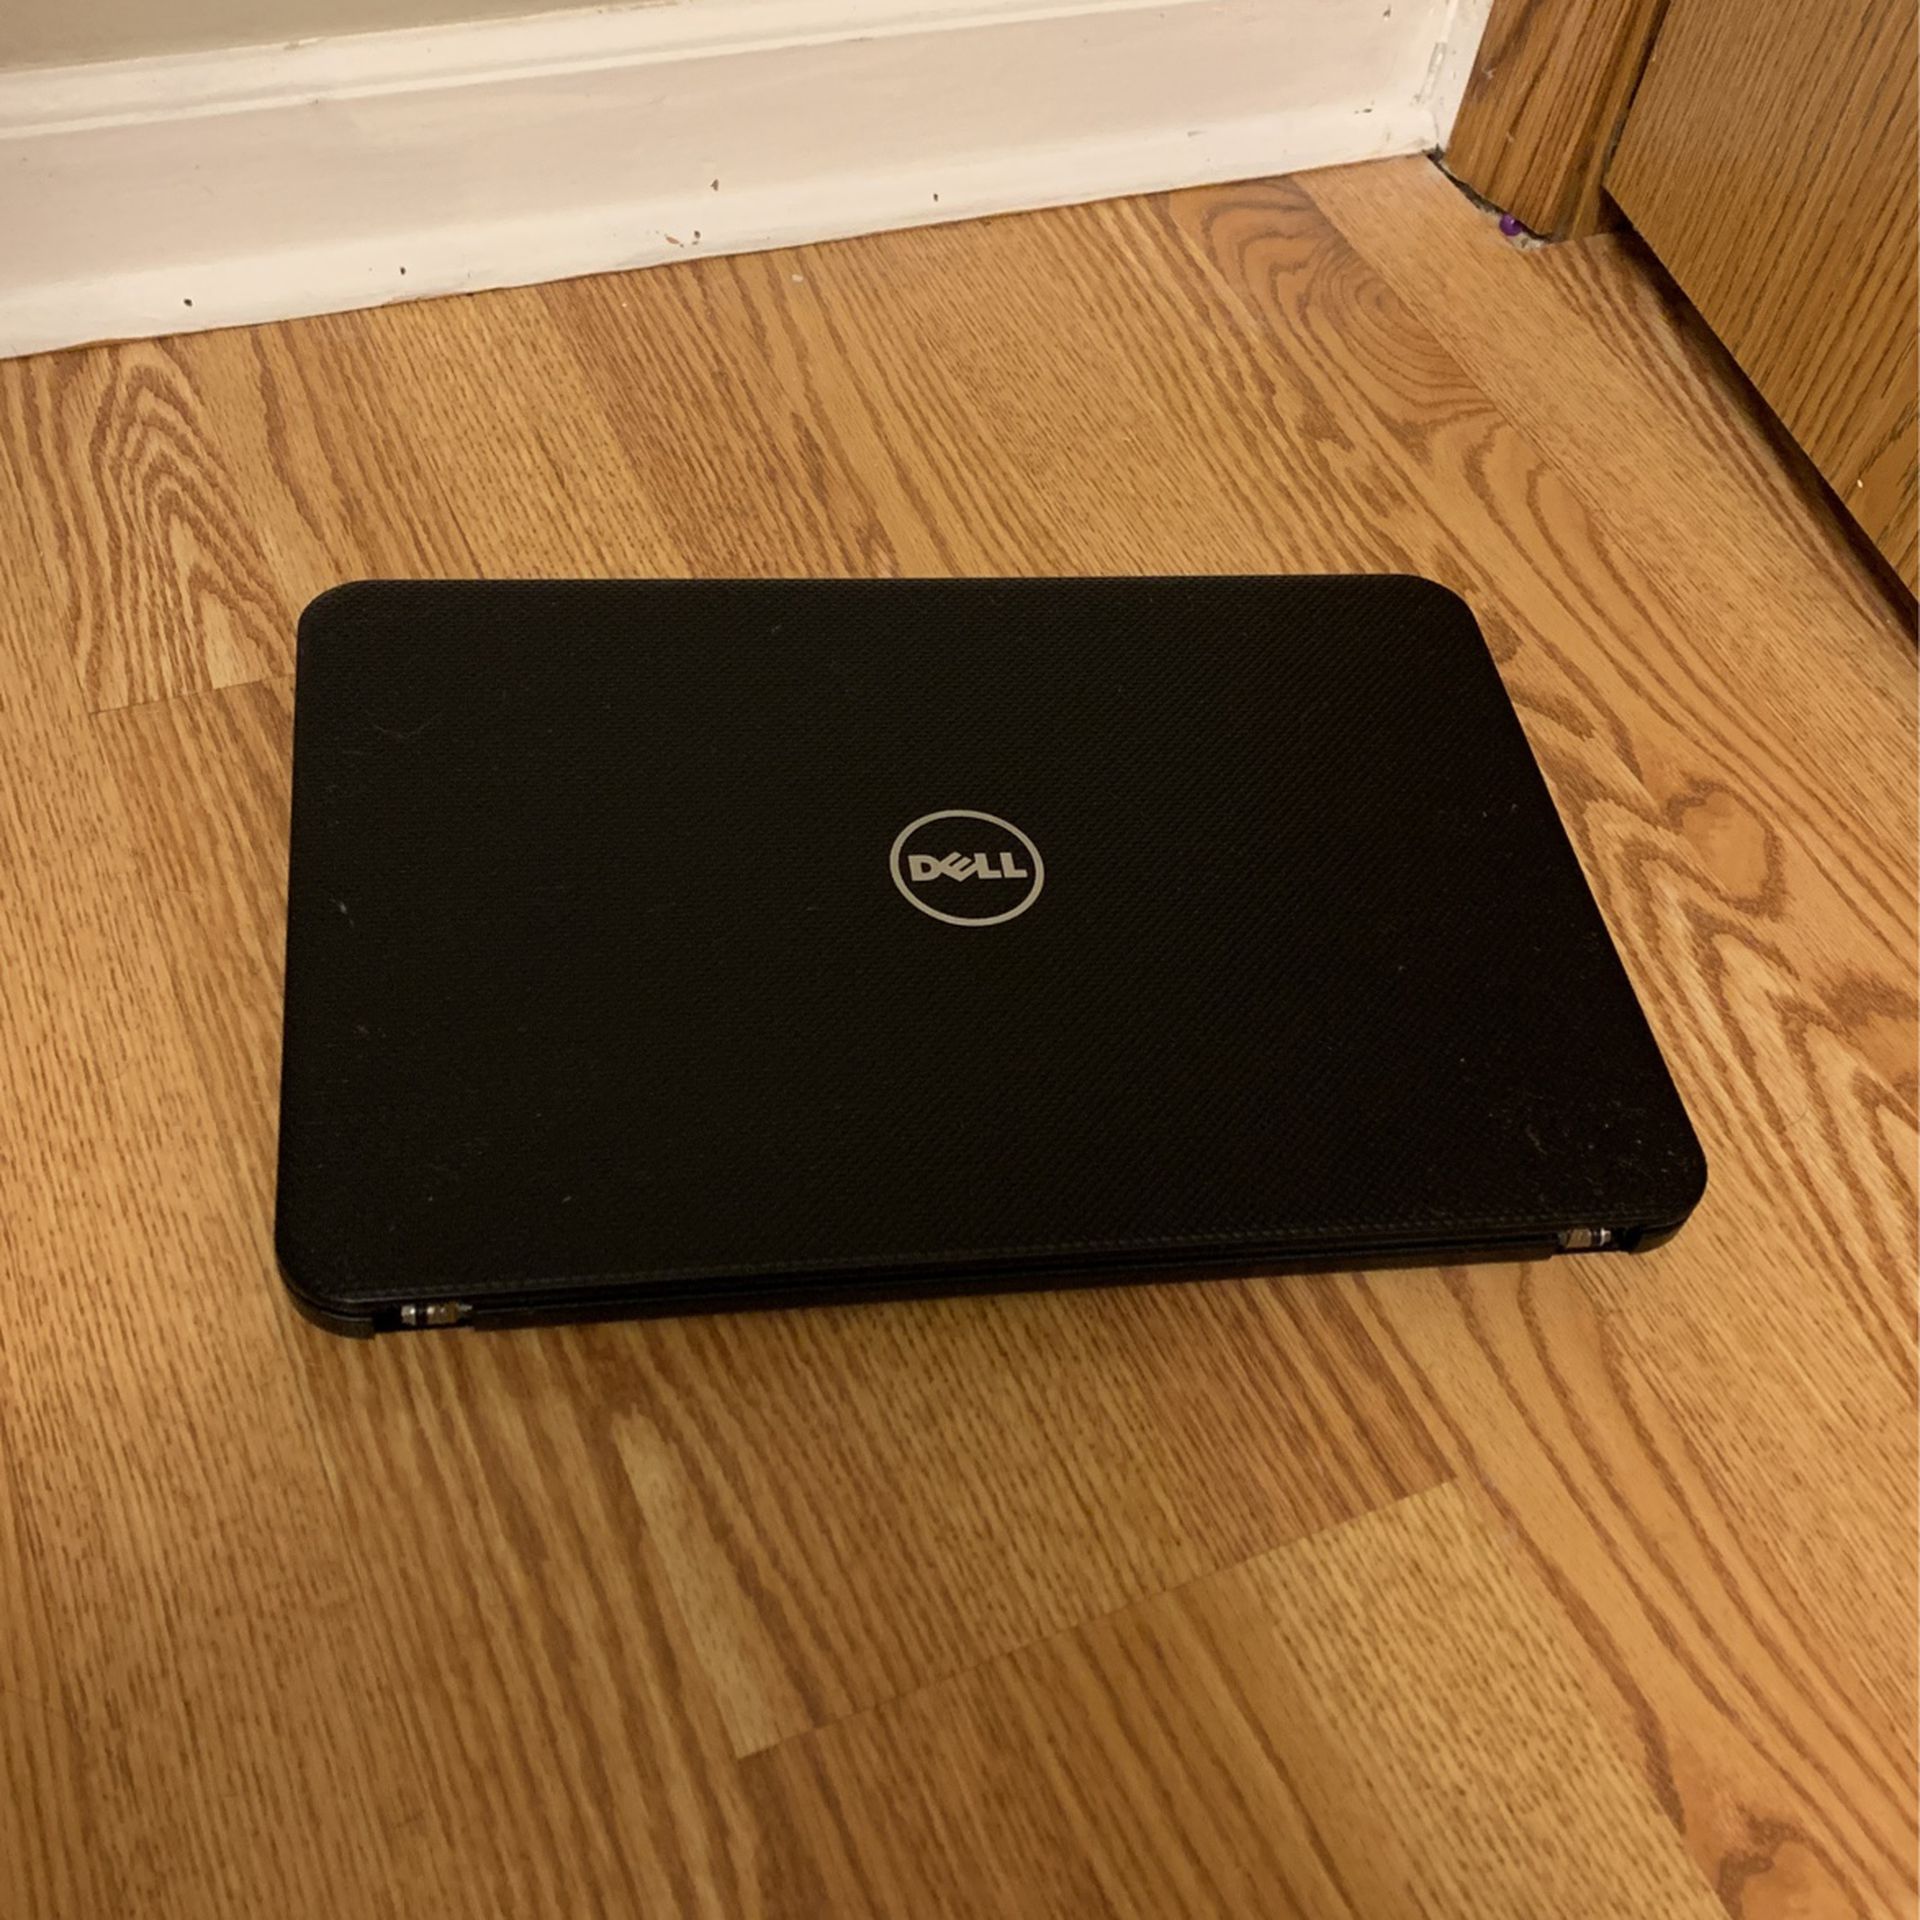 Dell Inspiron 15 Laptop (READ DESCRIPTION)